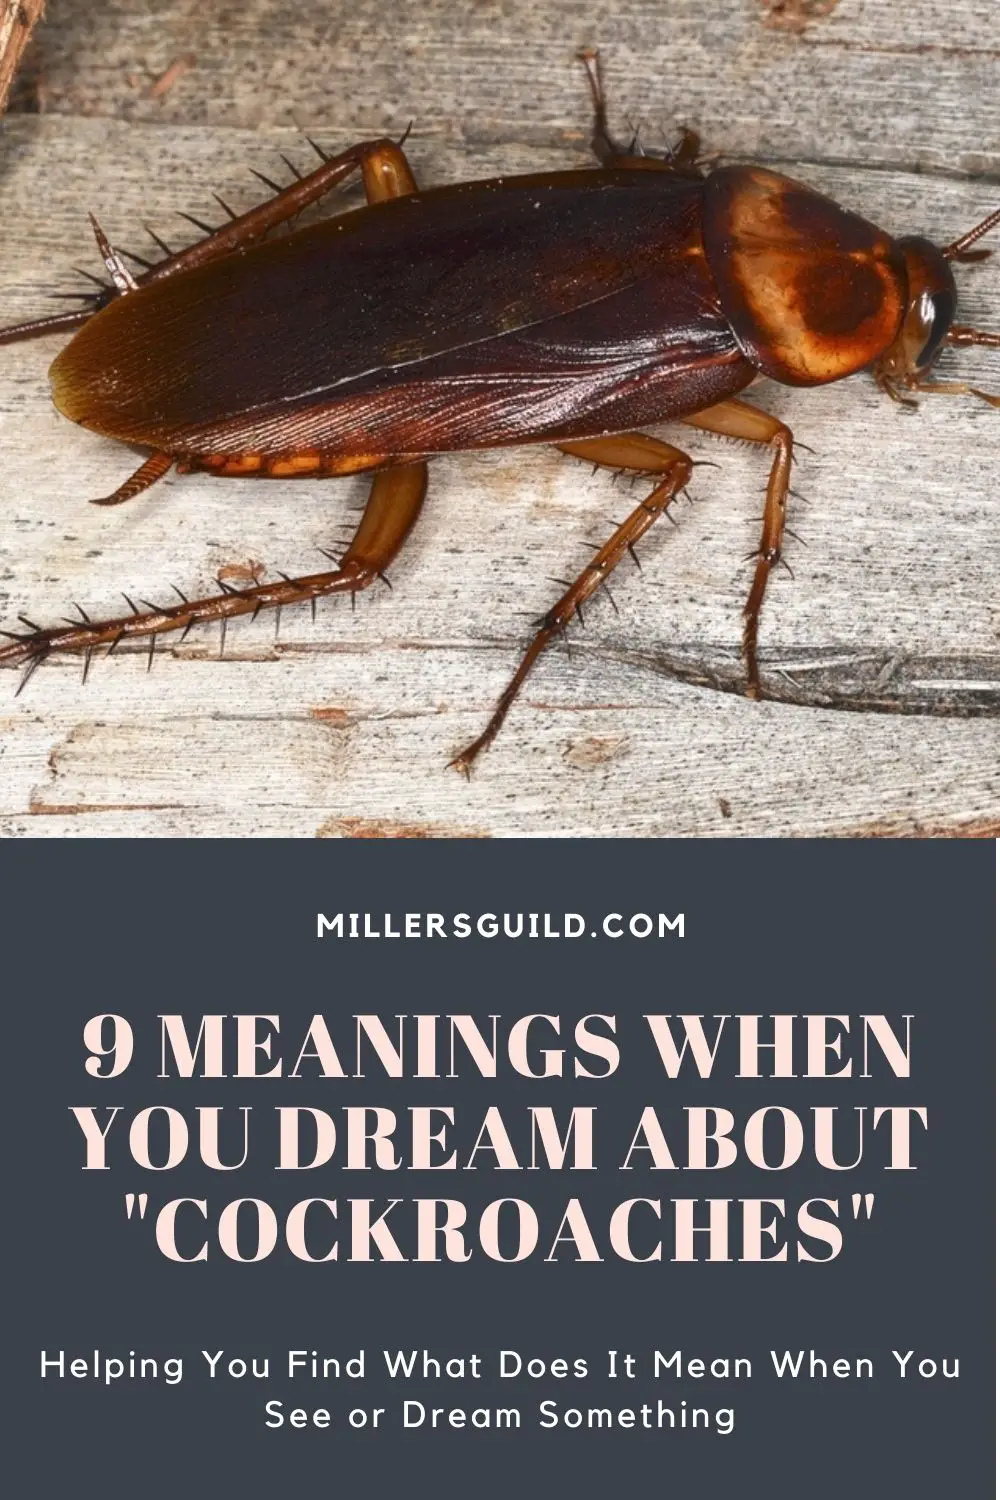 Killing Roaches In Dreams